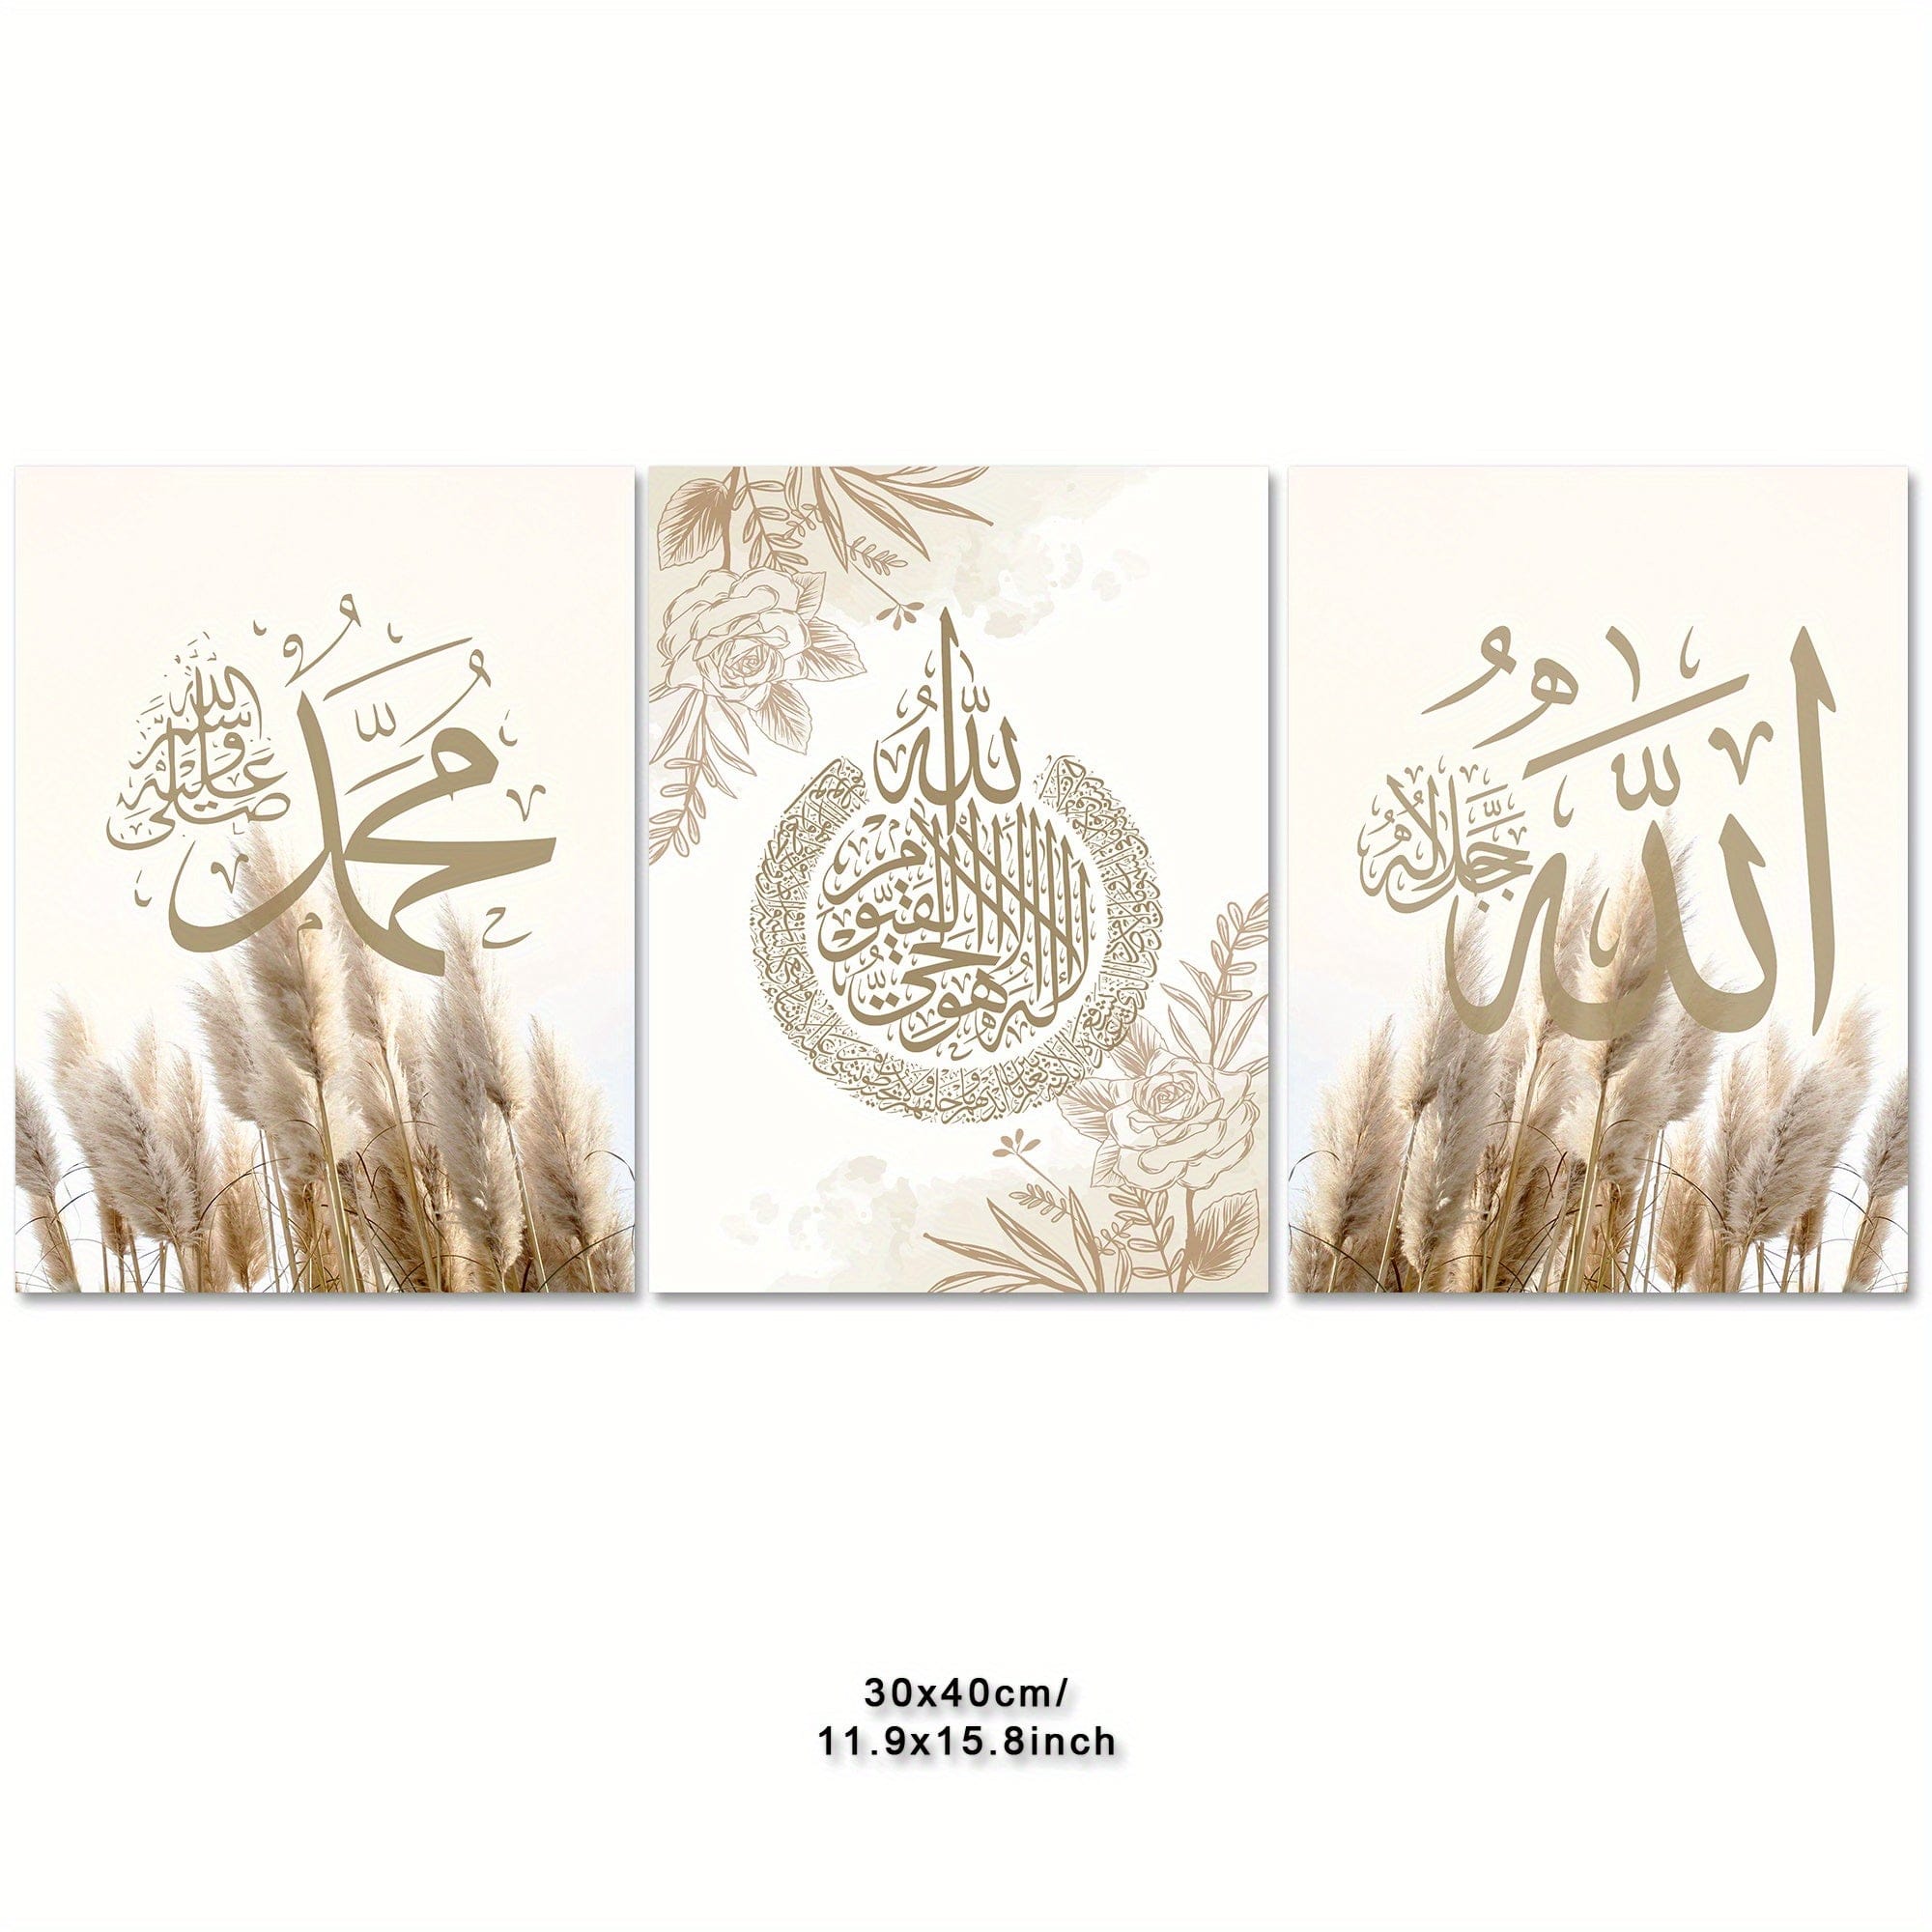 deen-souvenir customized 04 / 30 X 40 Cm/ 3-teiliges Islamisches Leinwandbild mit Motivationszitat - Typografie Kunstwerk 17592238193709